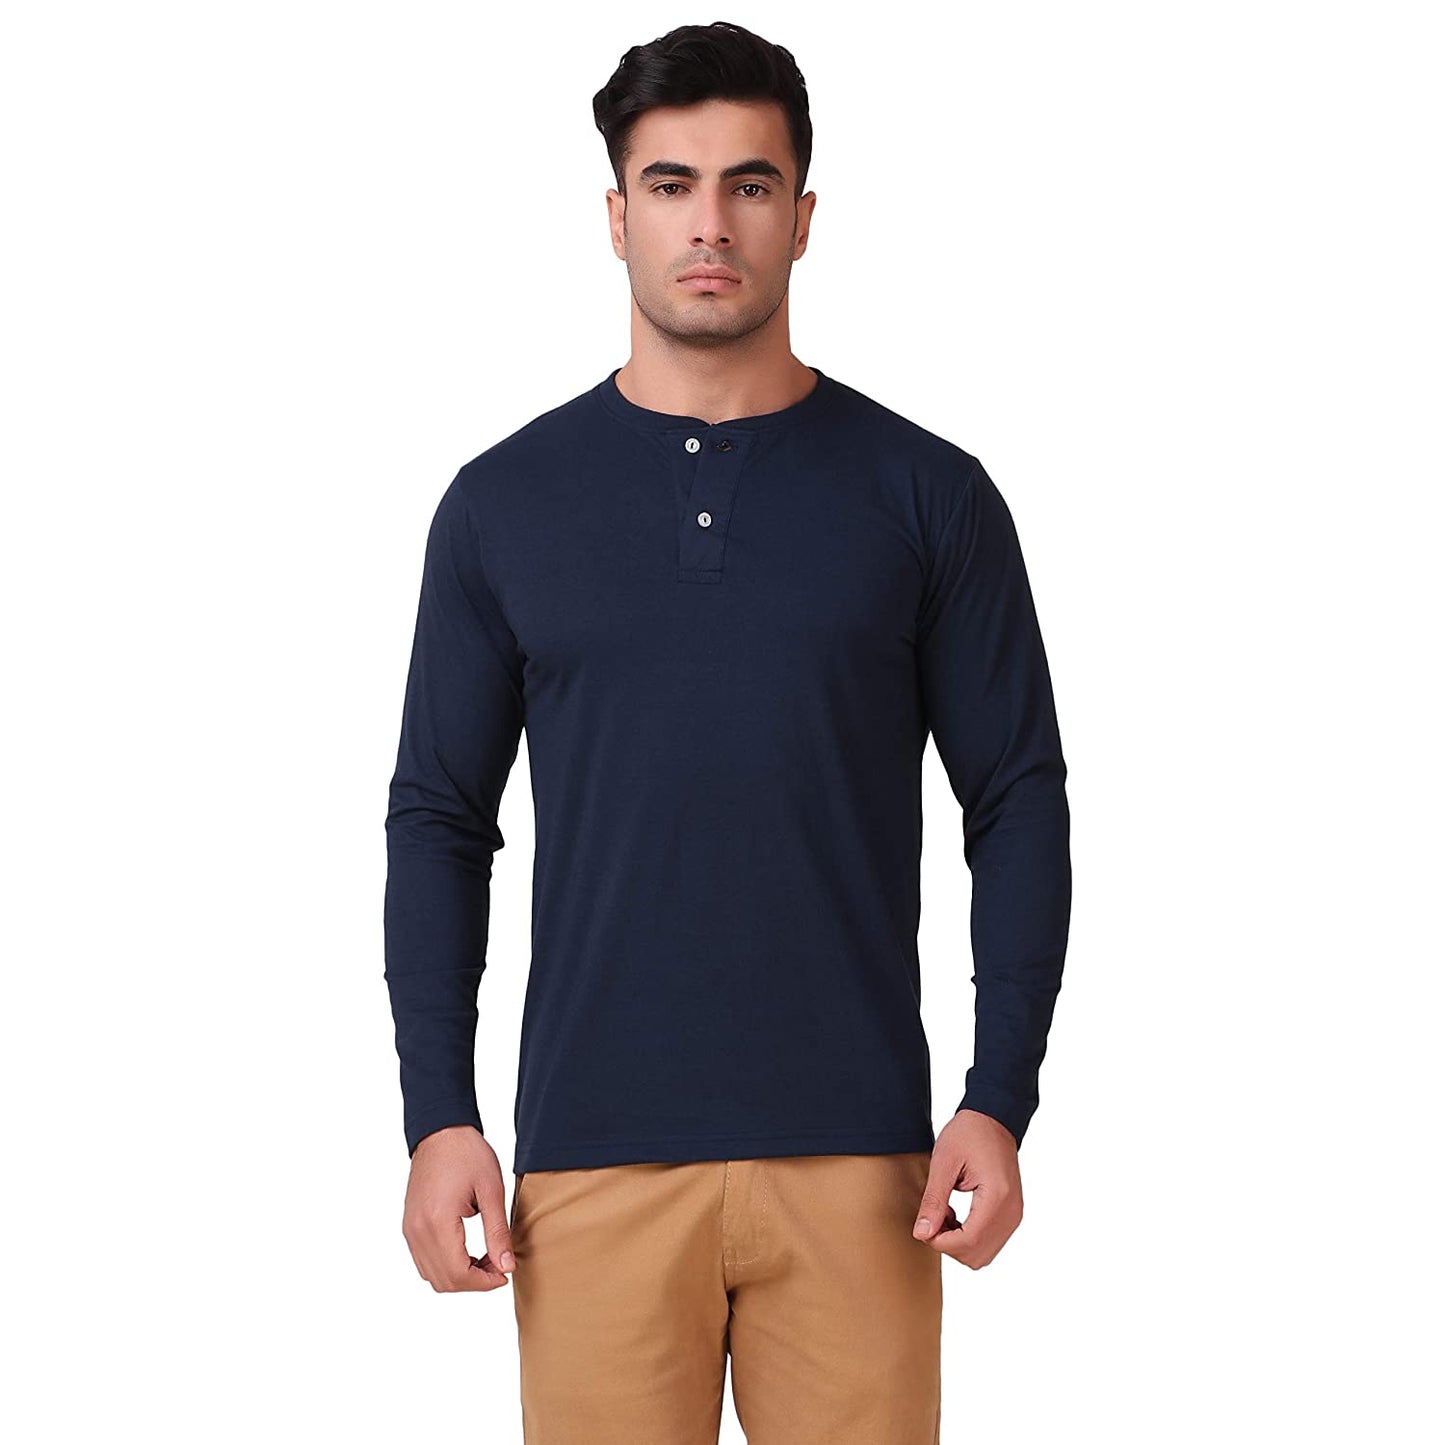 Navy Blue Henley T-Shirt For Men